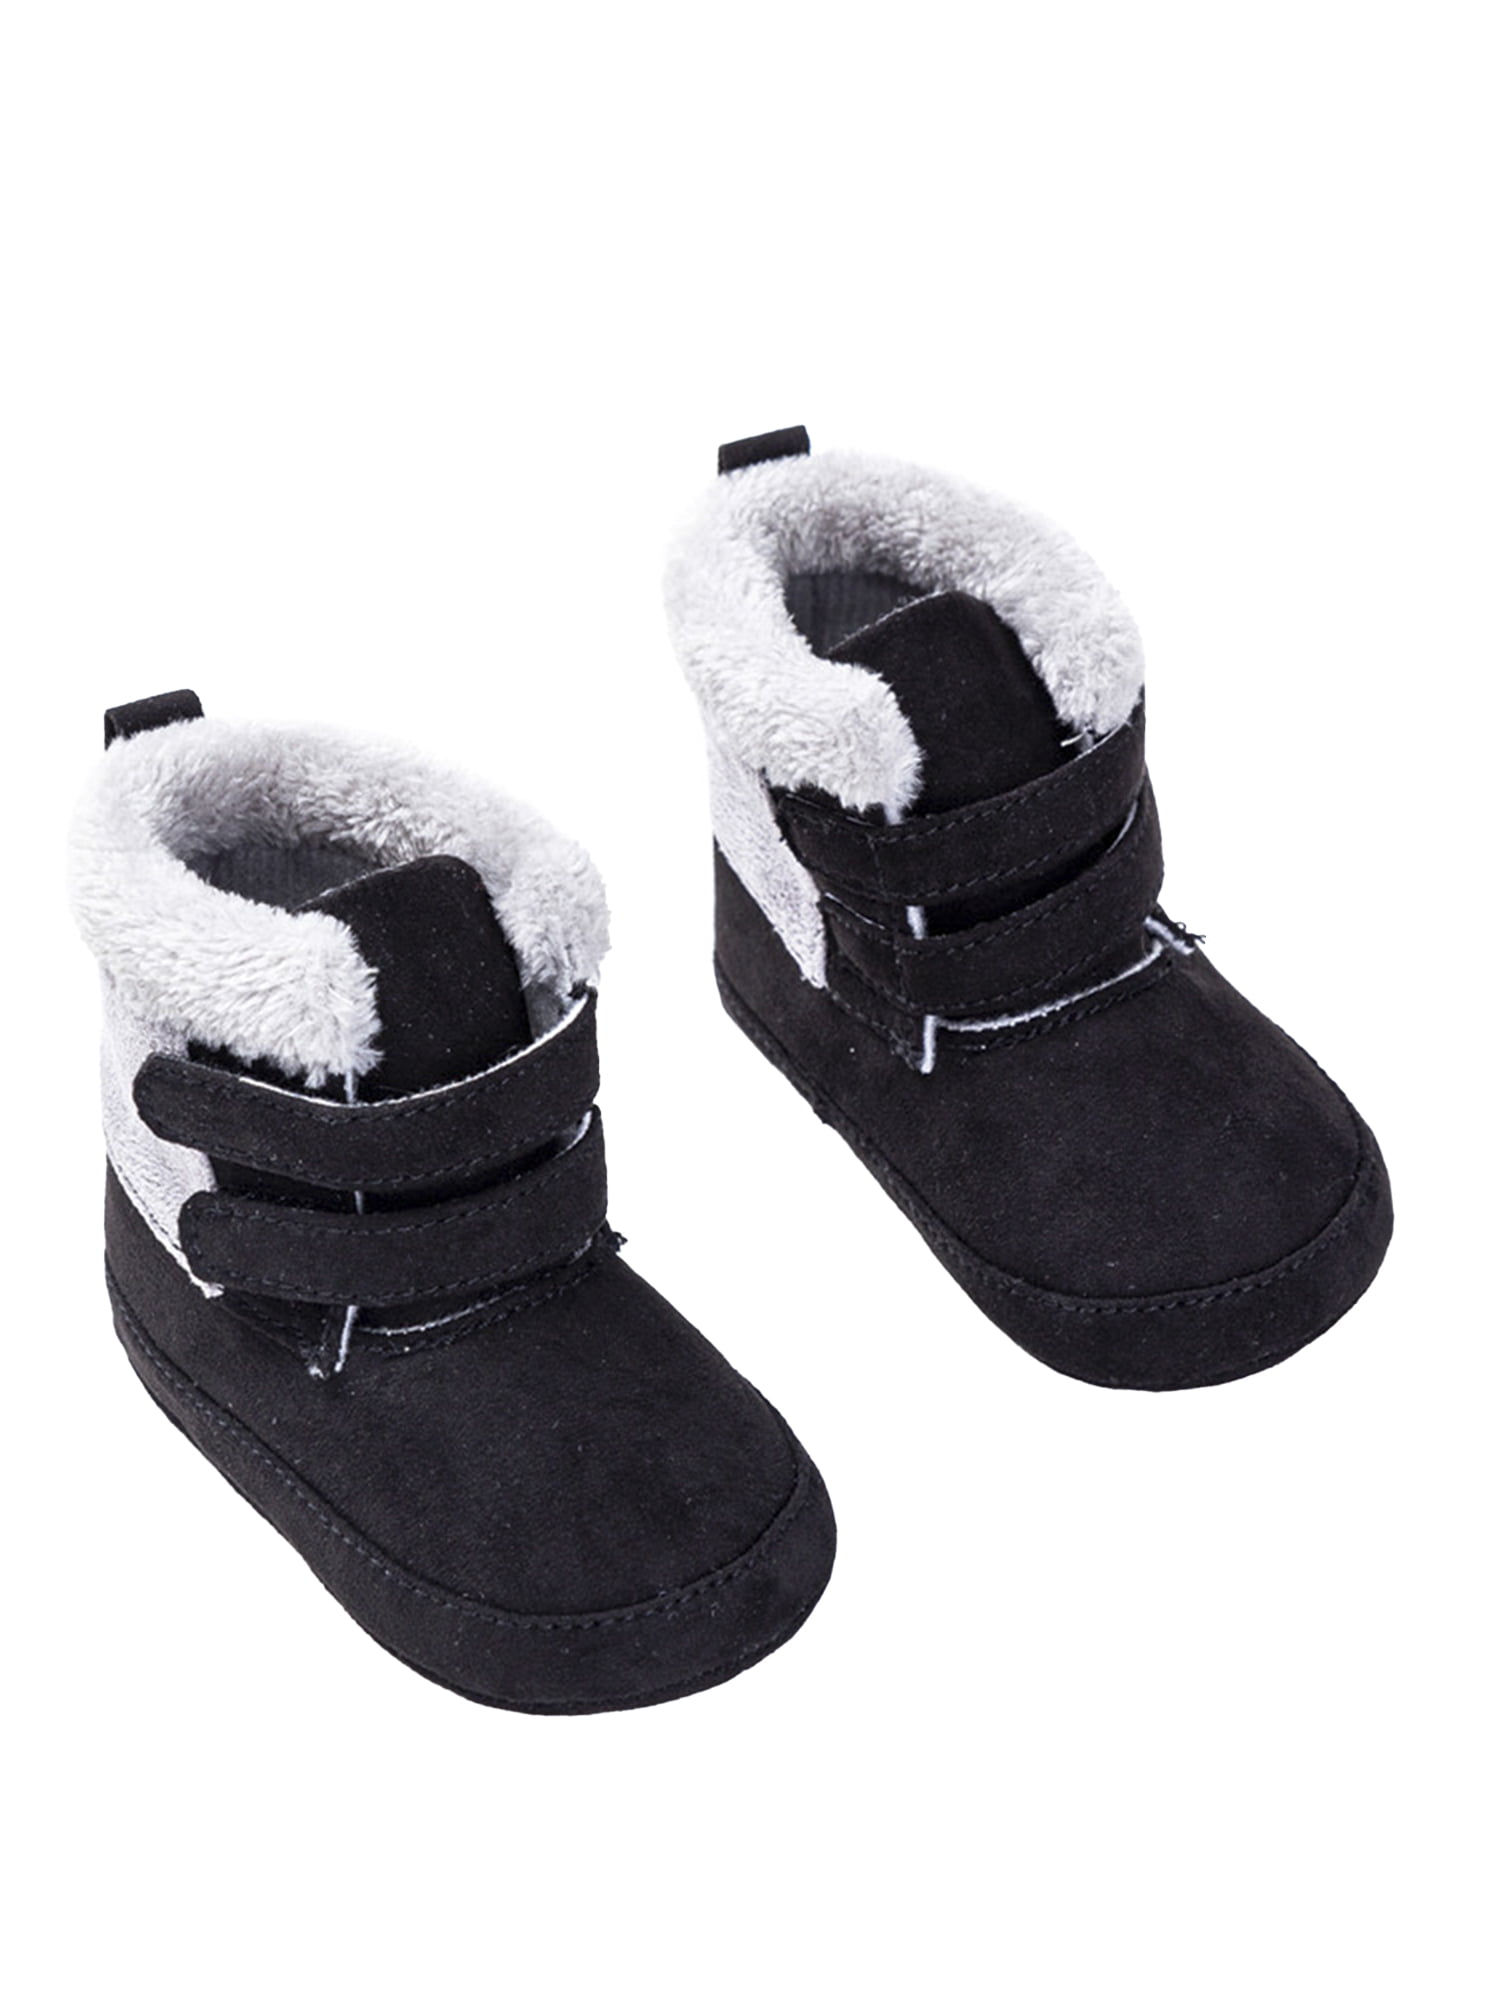 Baby Girl Boy Snow Boots Winter Warm Boots Infant Kids Newborn Soft Bottom Shoes 